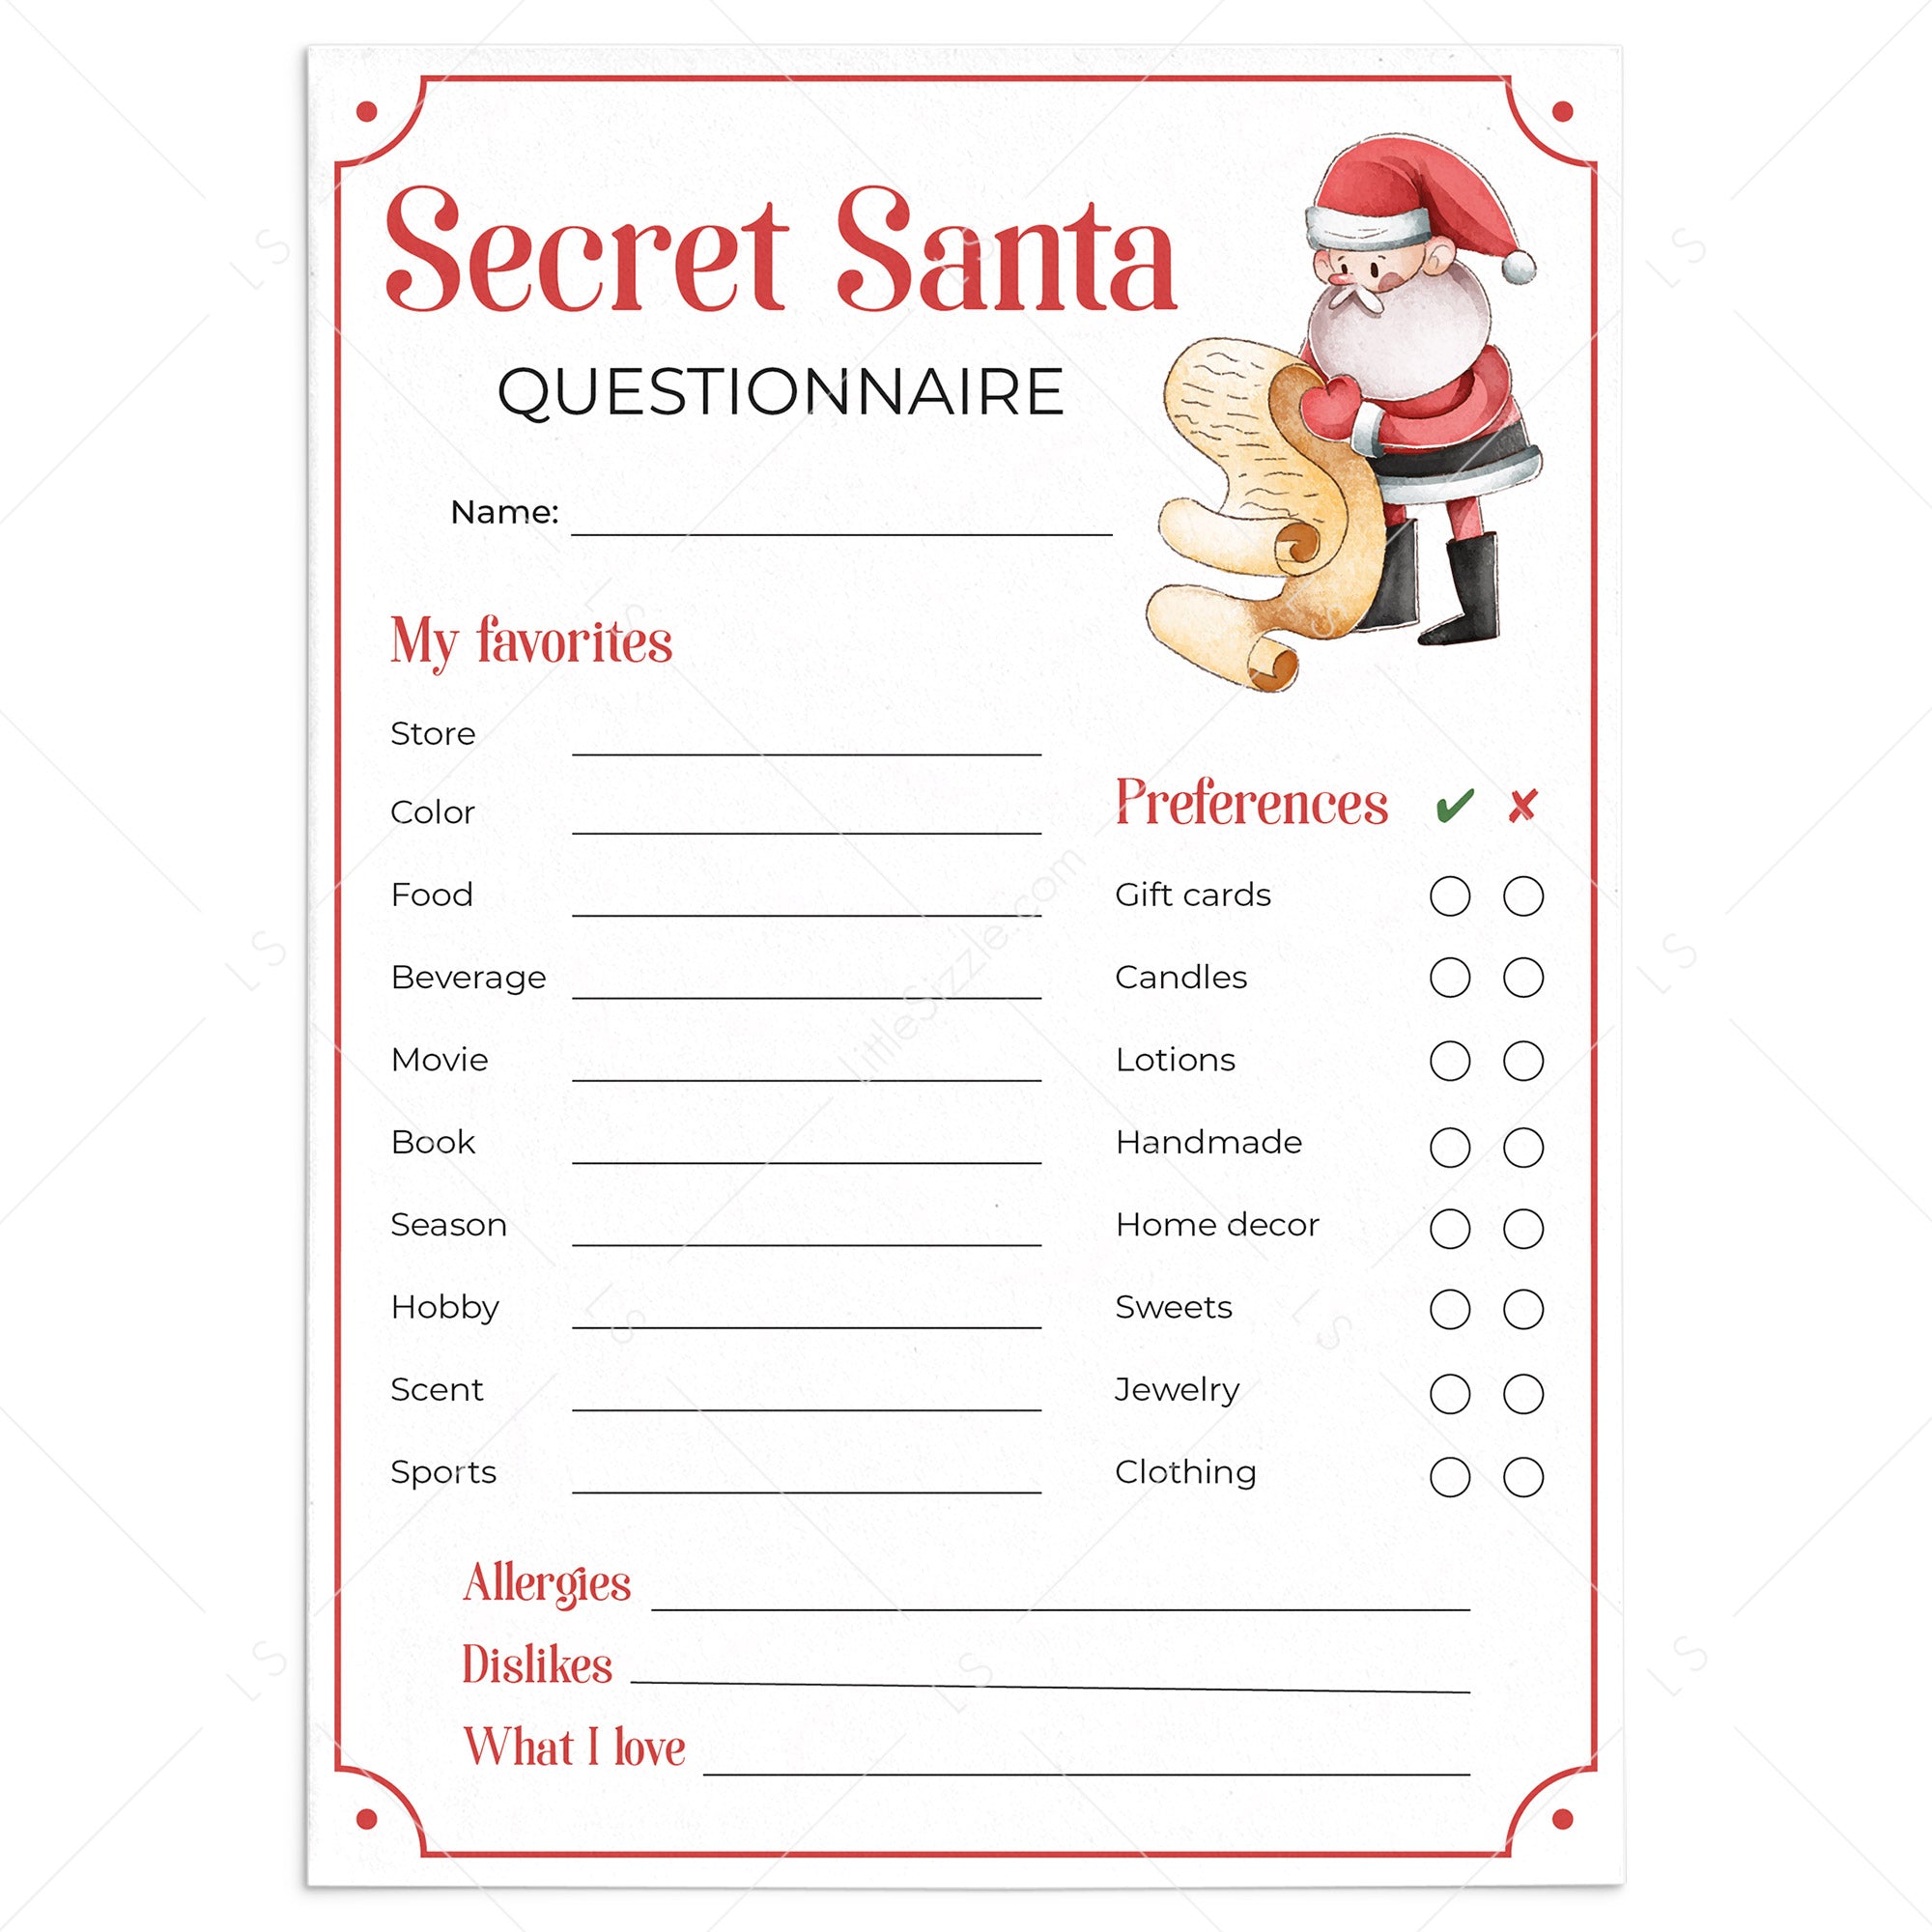 Secret Santa Questionnaire For Gift Exchange Printable LittleSizzle